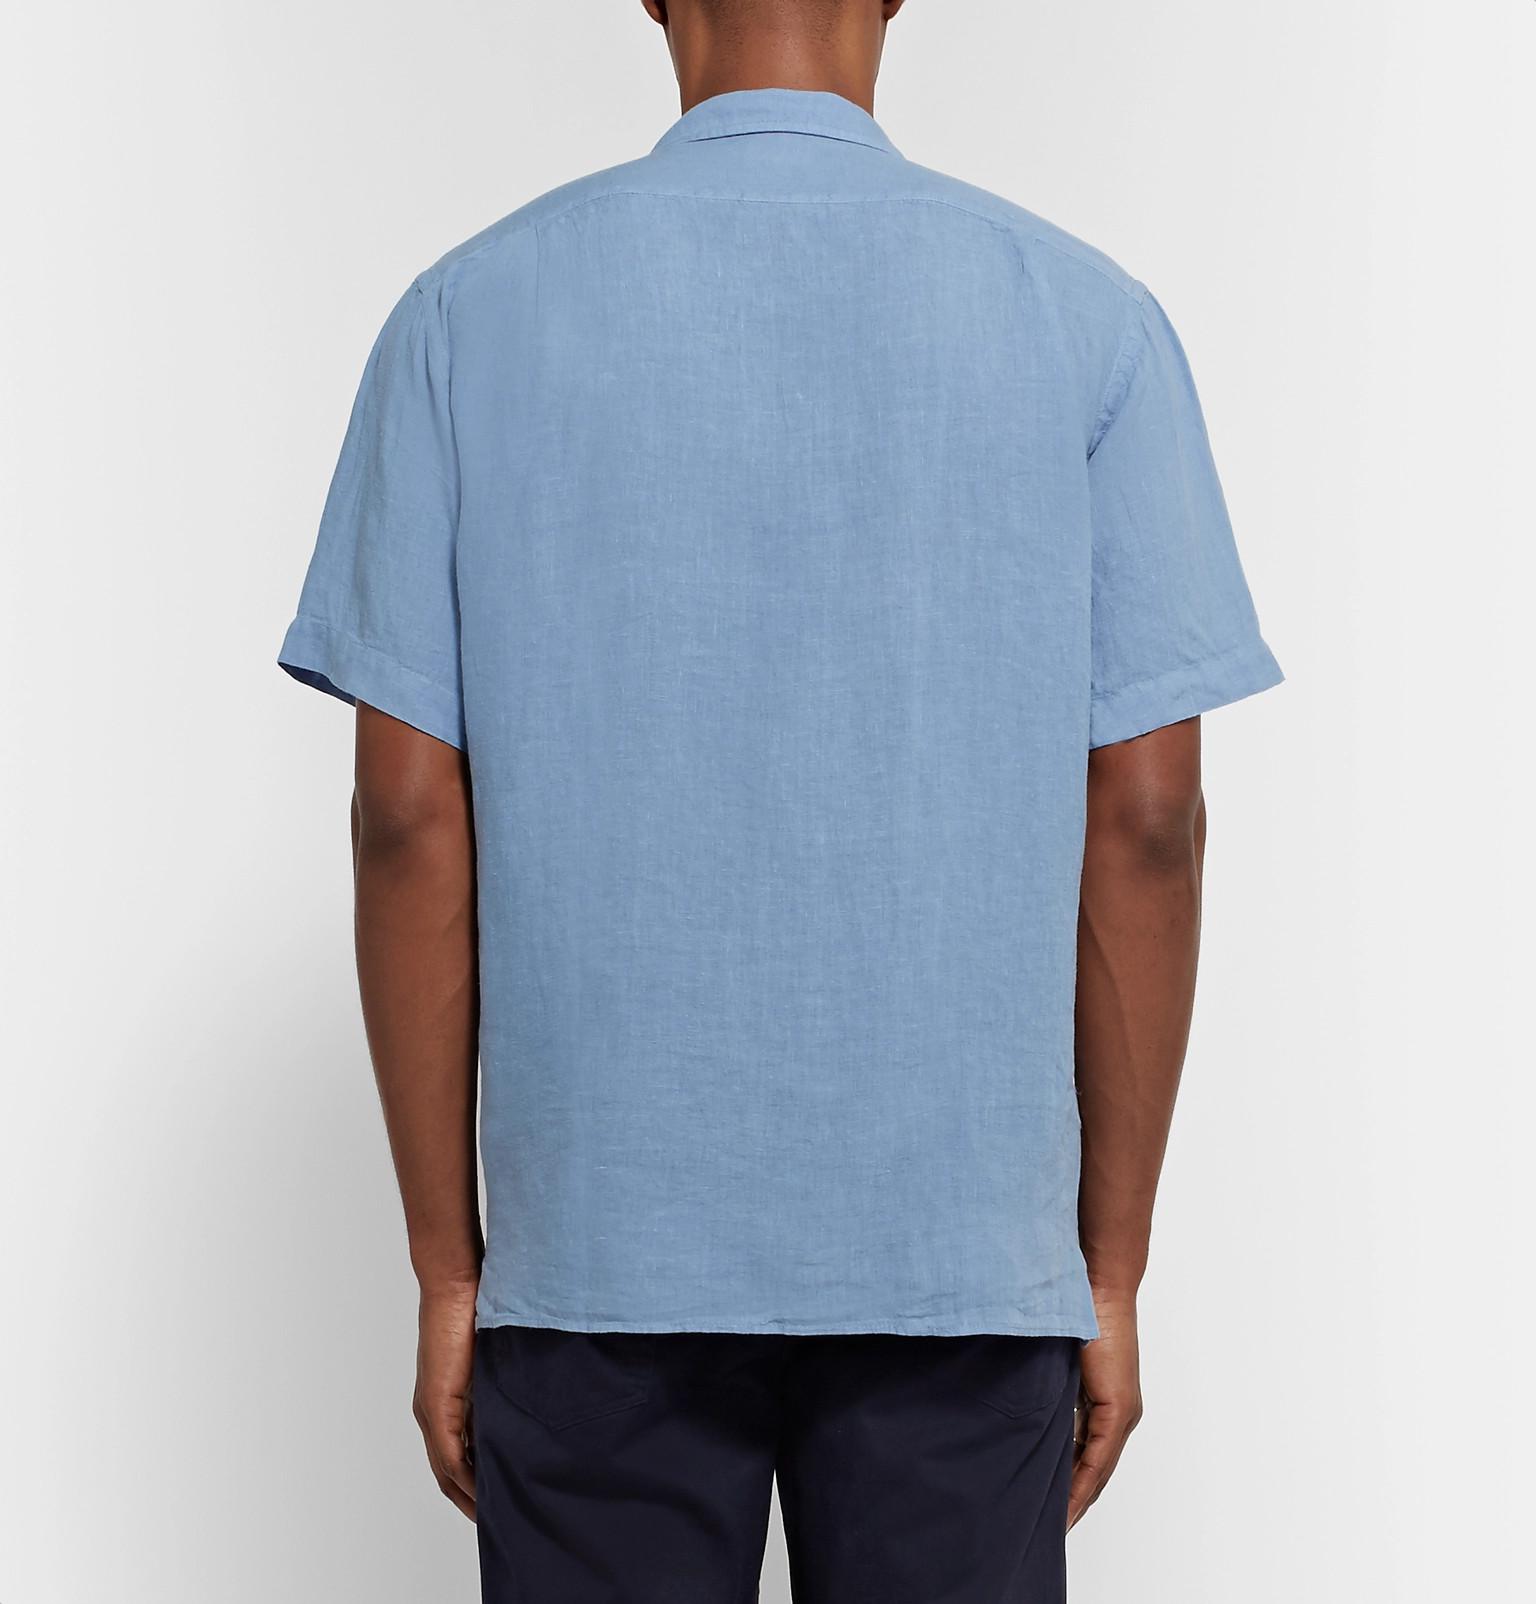 Hartford Camp-collar Linen Shirt in Blue for Men - Lyst